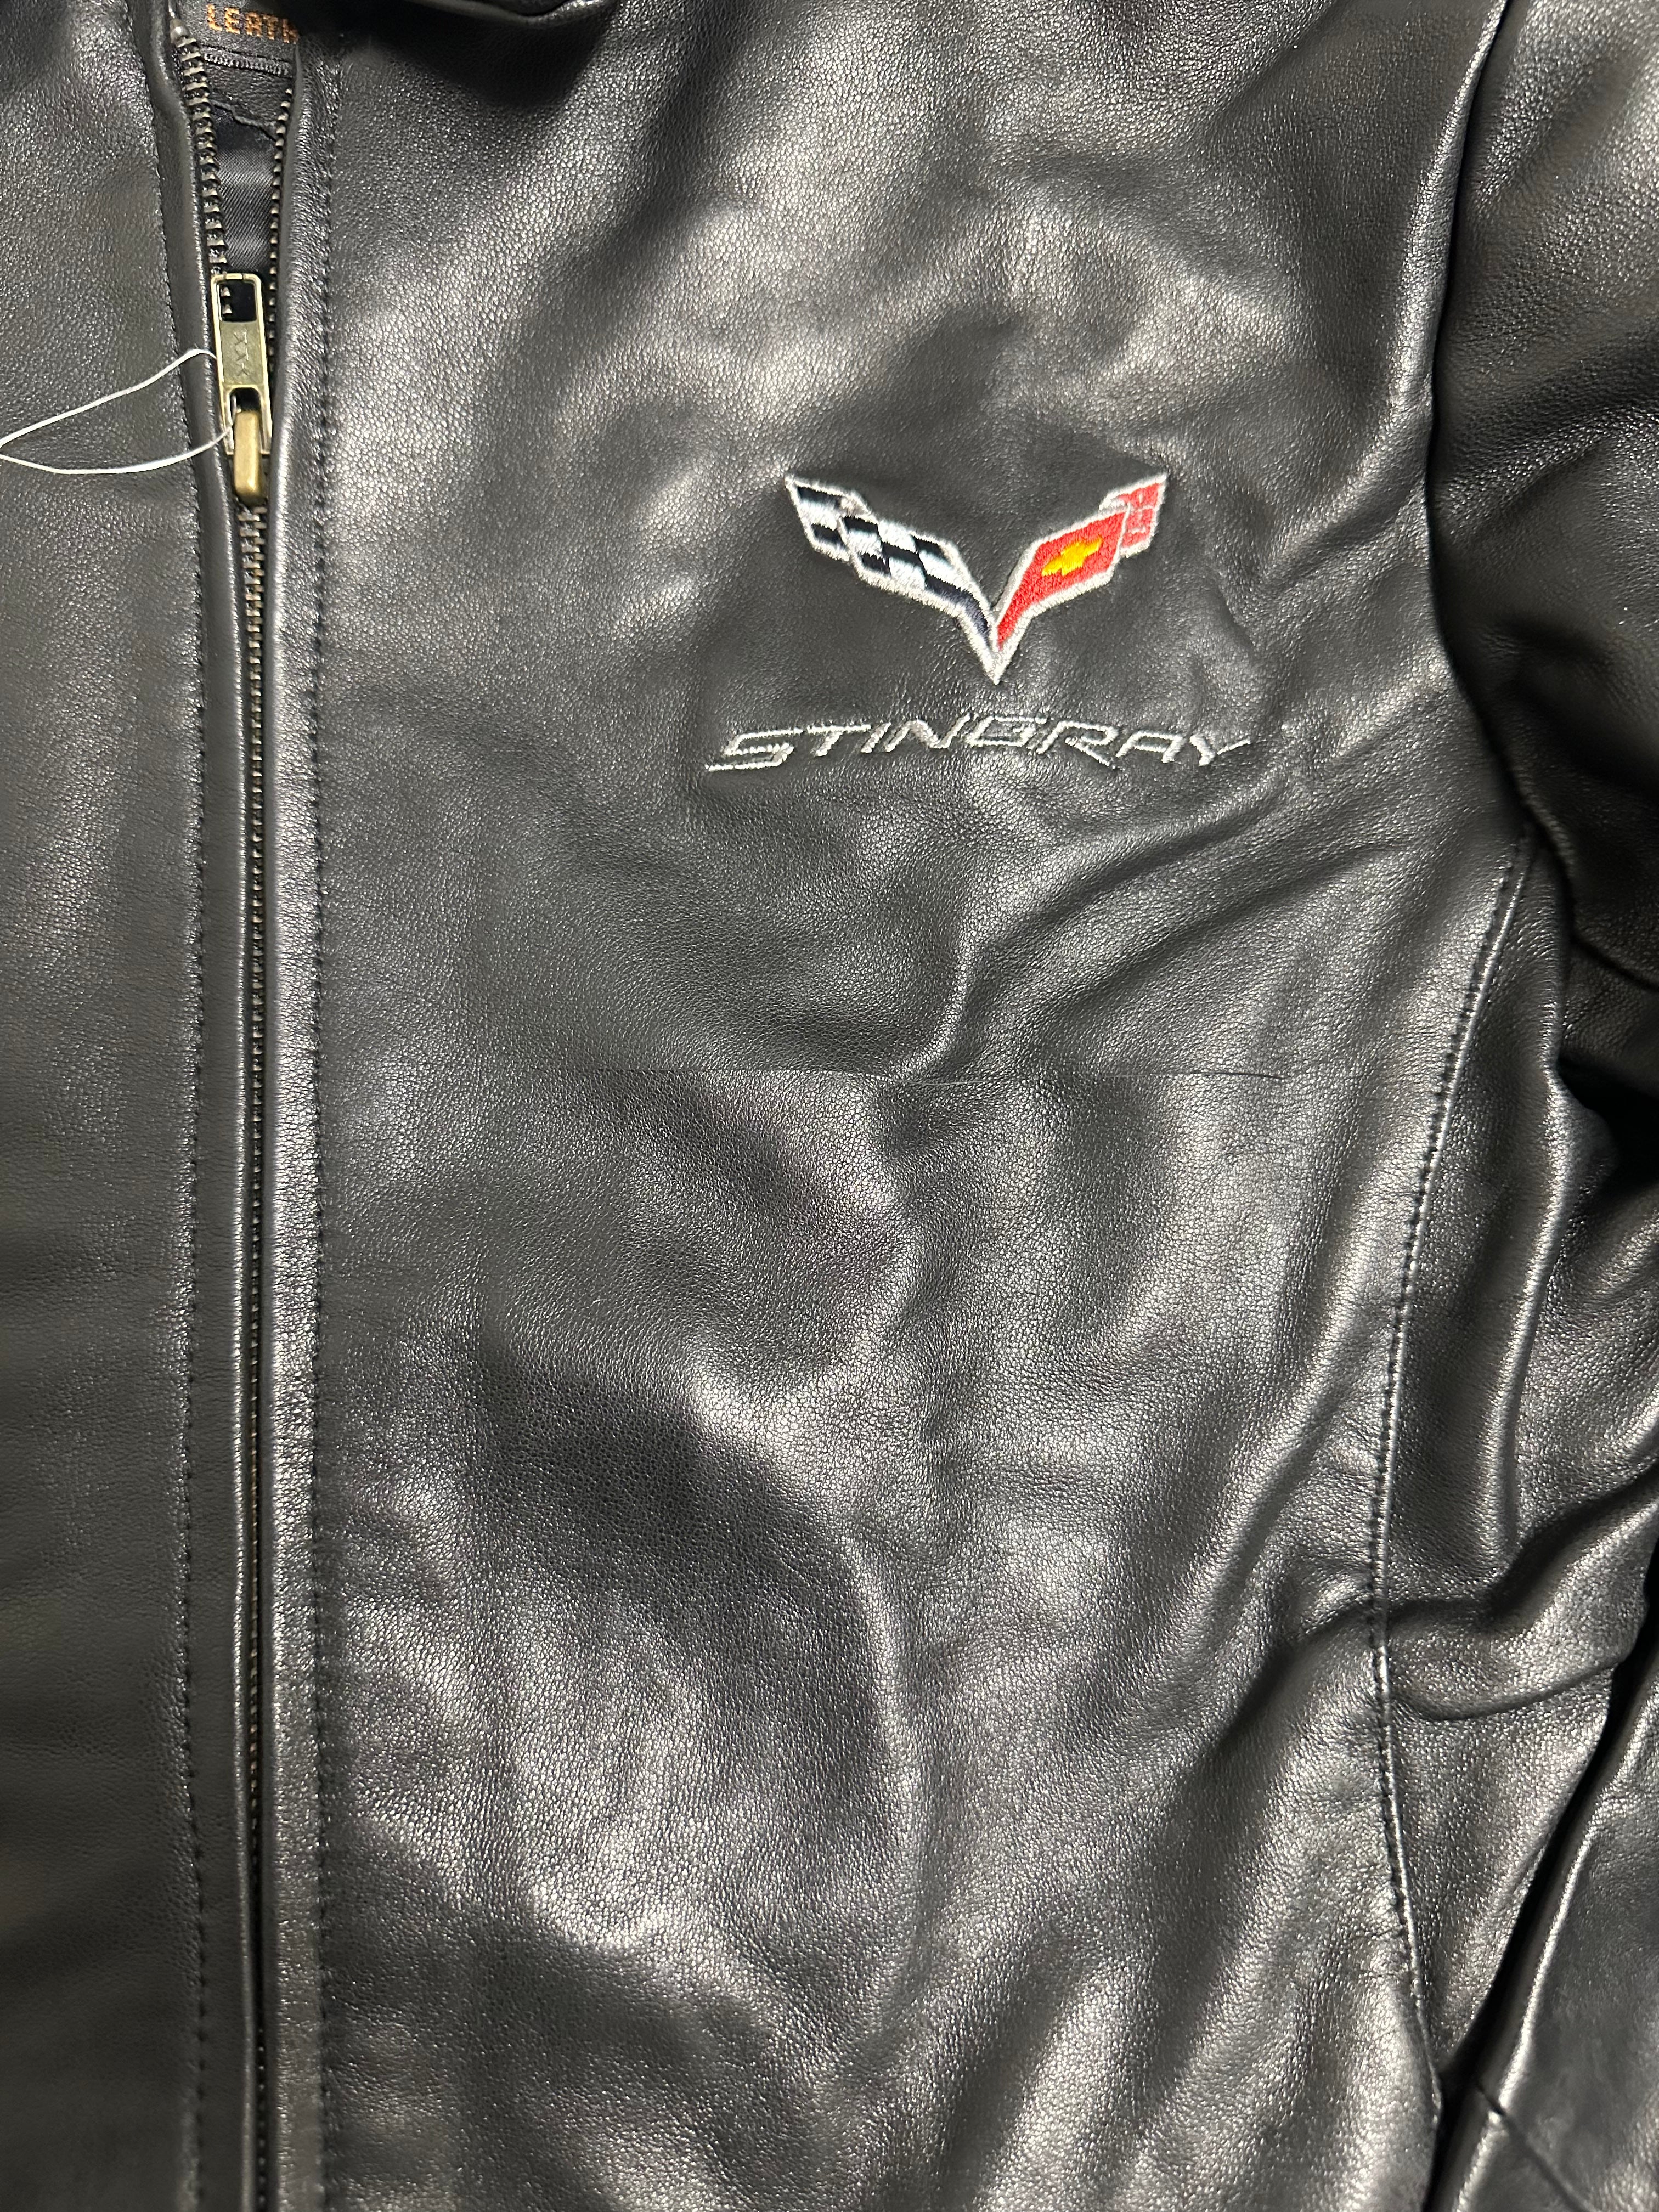 C7 Corvette Ladies Leather Bomber Jacket - Black (Small)